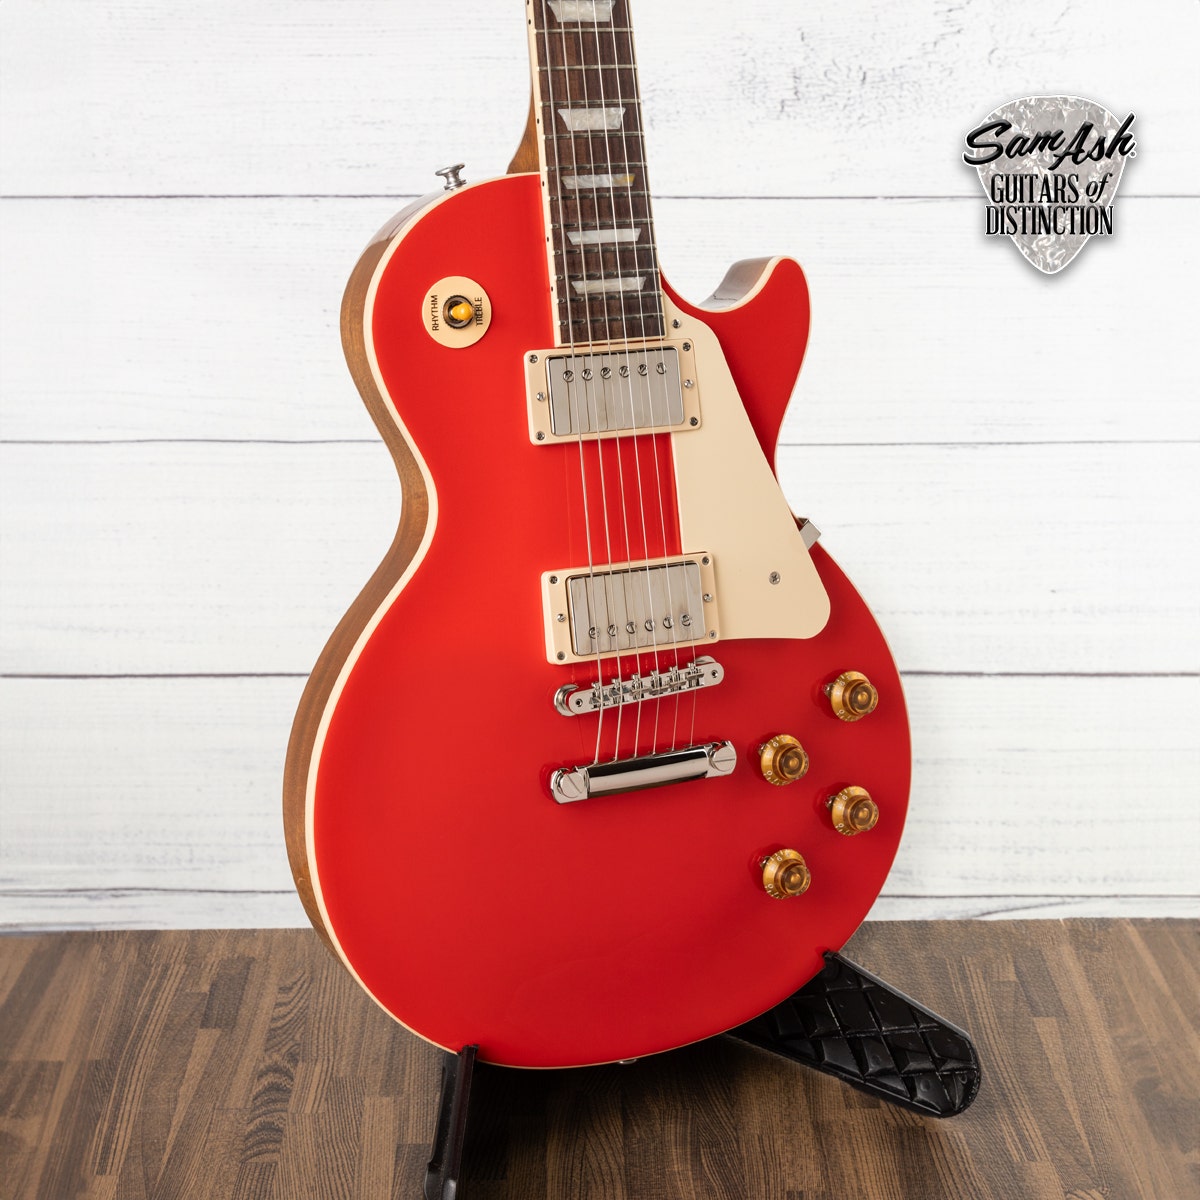 GIBSON LES PAUL STANDARD guitar 50S ELECTRIC GUITAR CARDINAL RED $2007